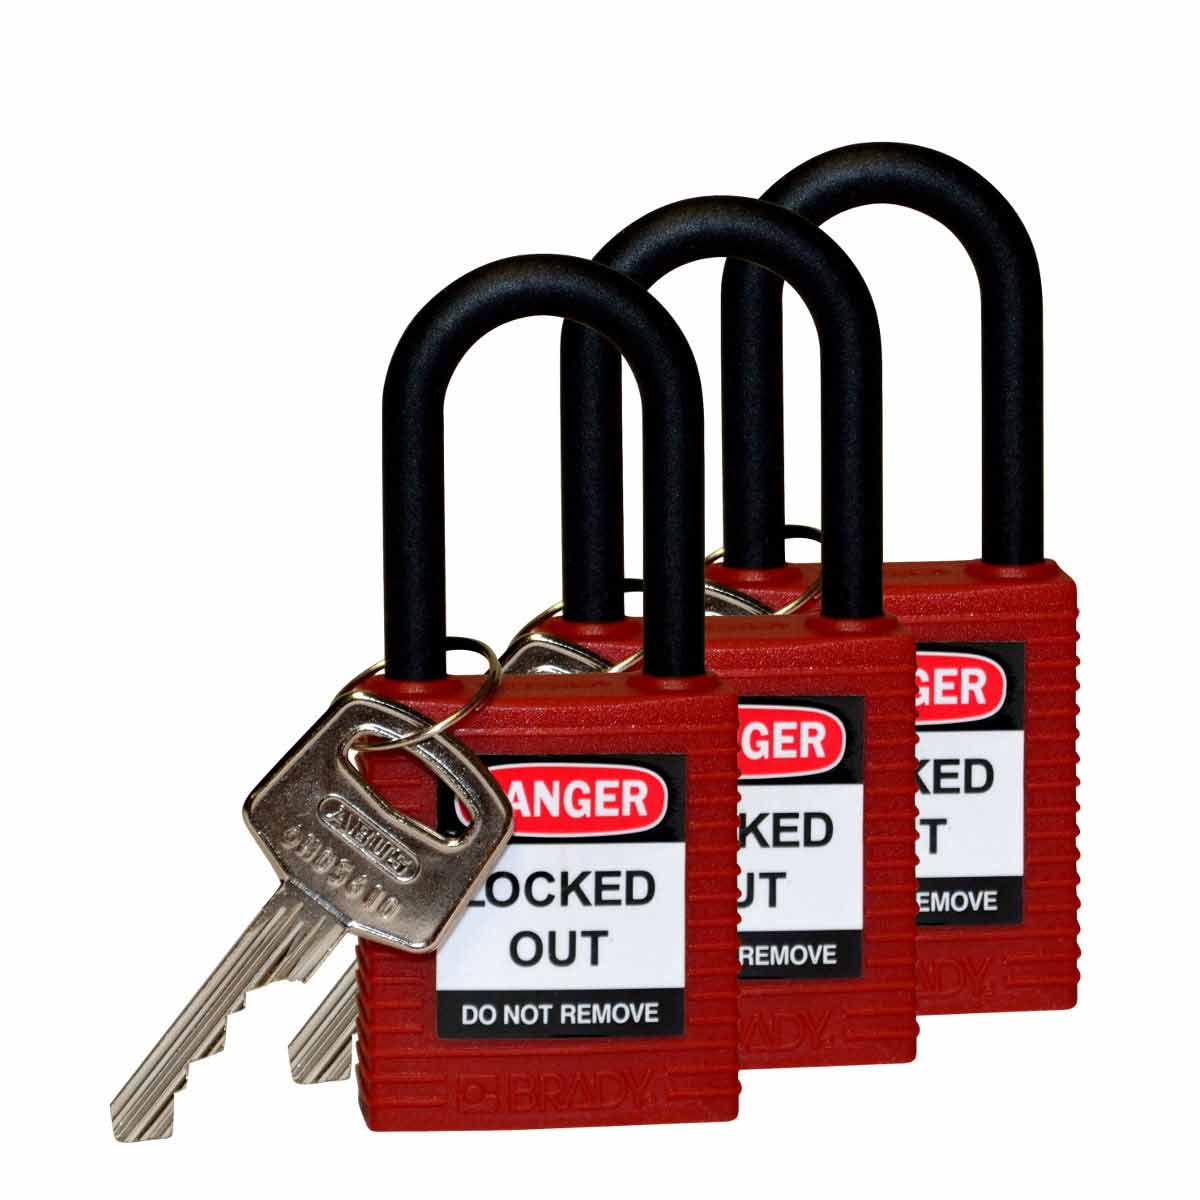 Brady Nylon Lockout Padlocks with Keyed Alike (3 Pack) from GME Supply